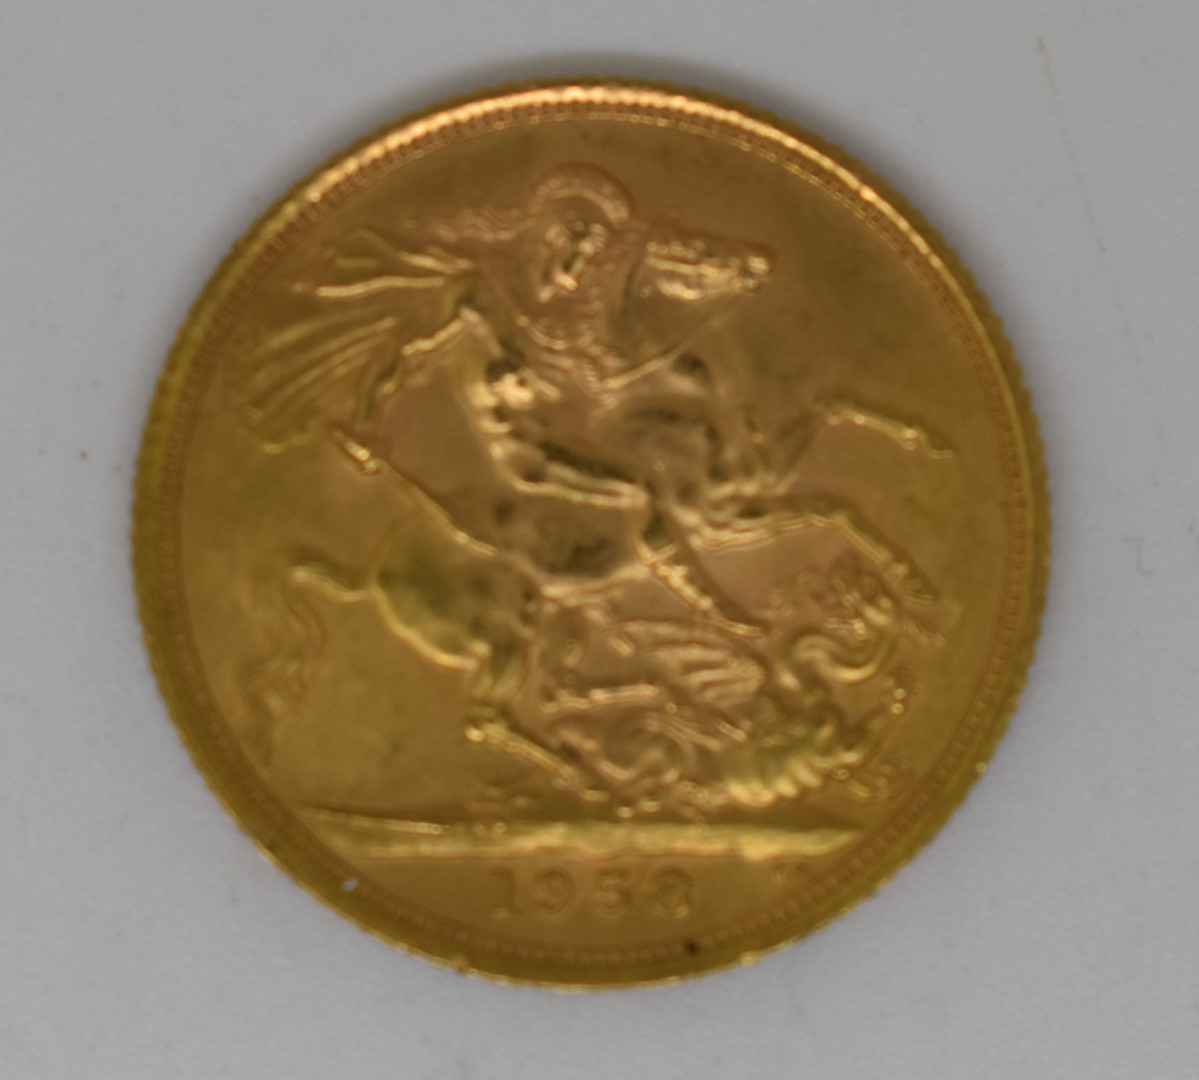 1958 Elizabeth II gold full sovereign - Image 2 of 2